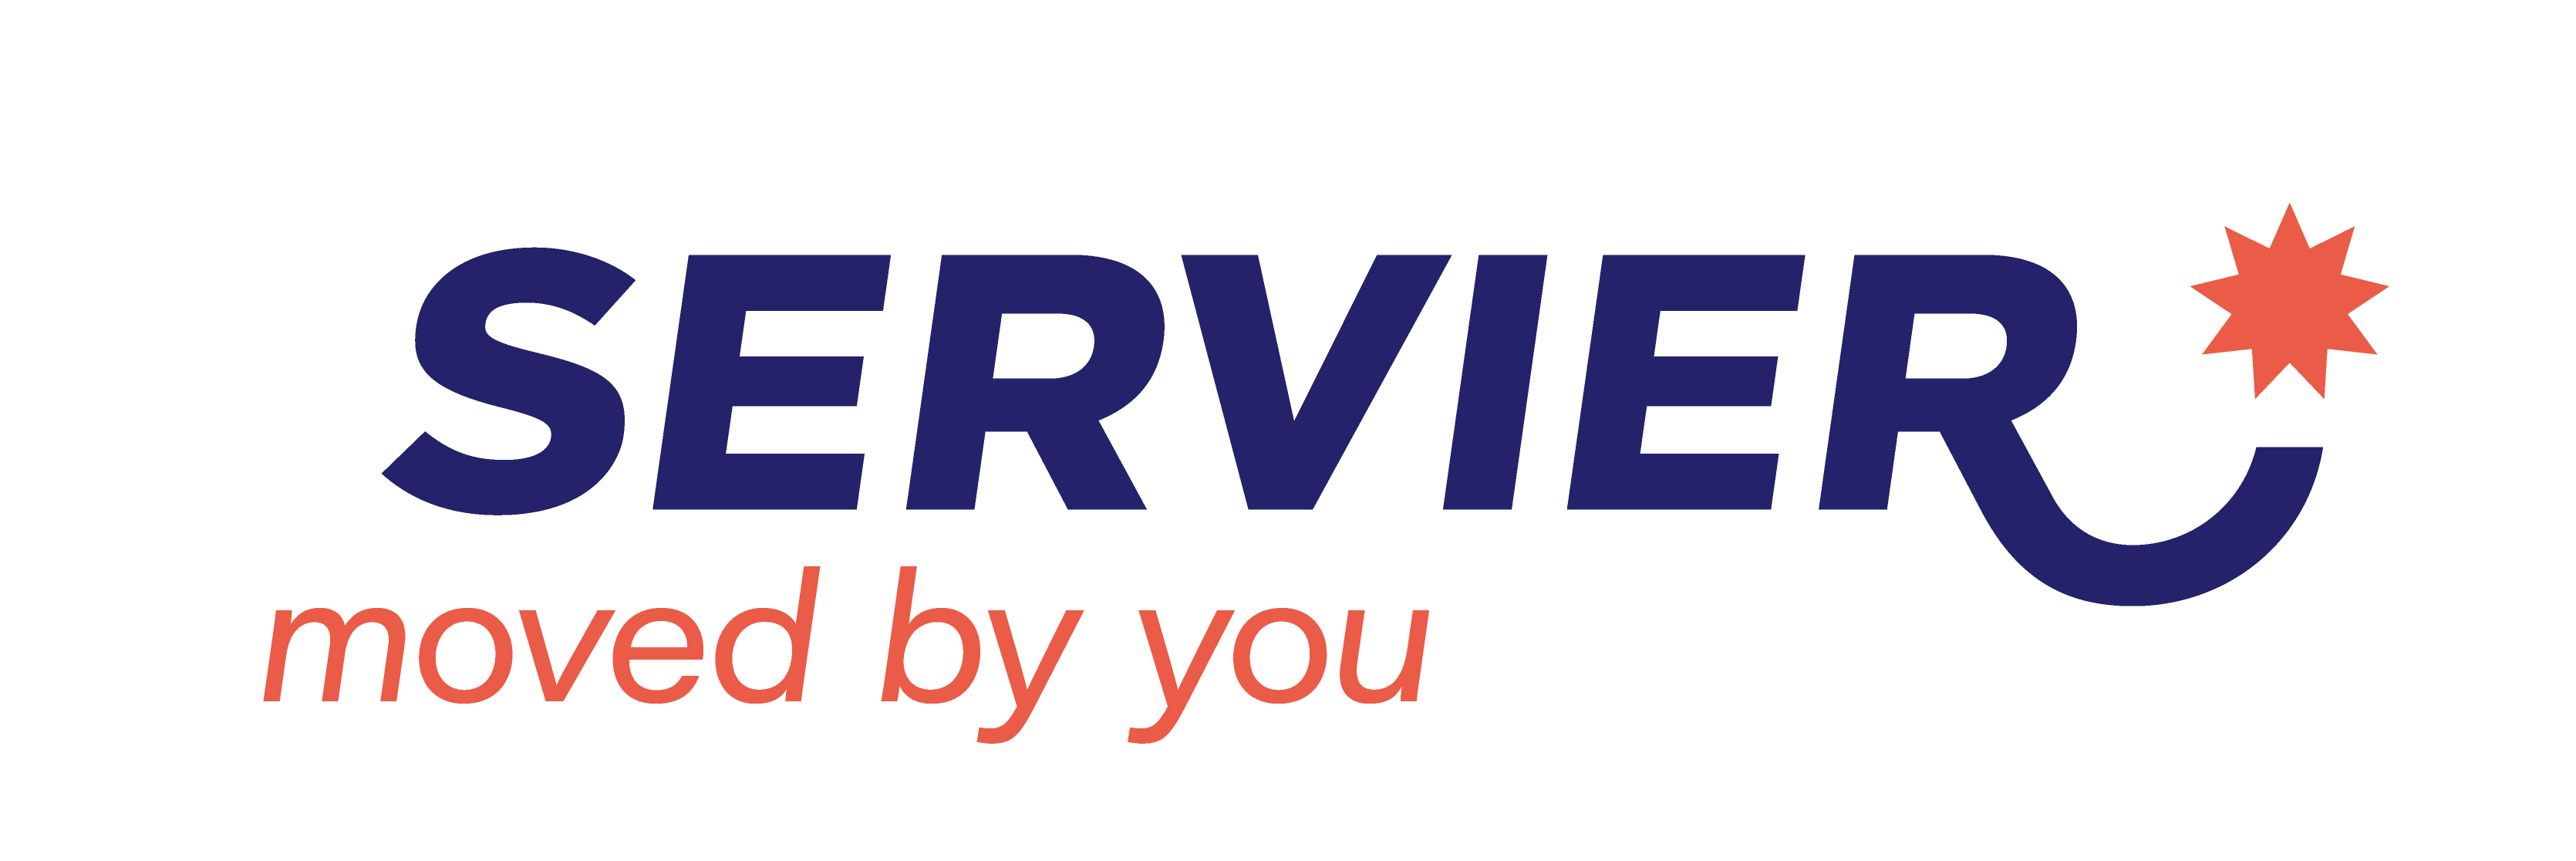 Servier company logo